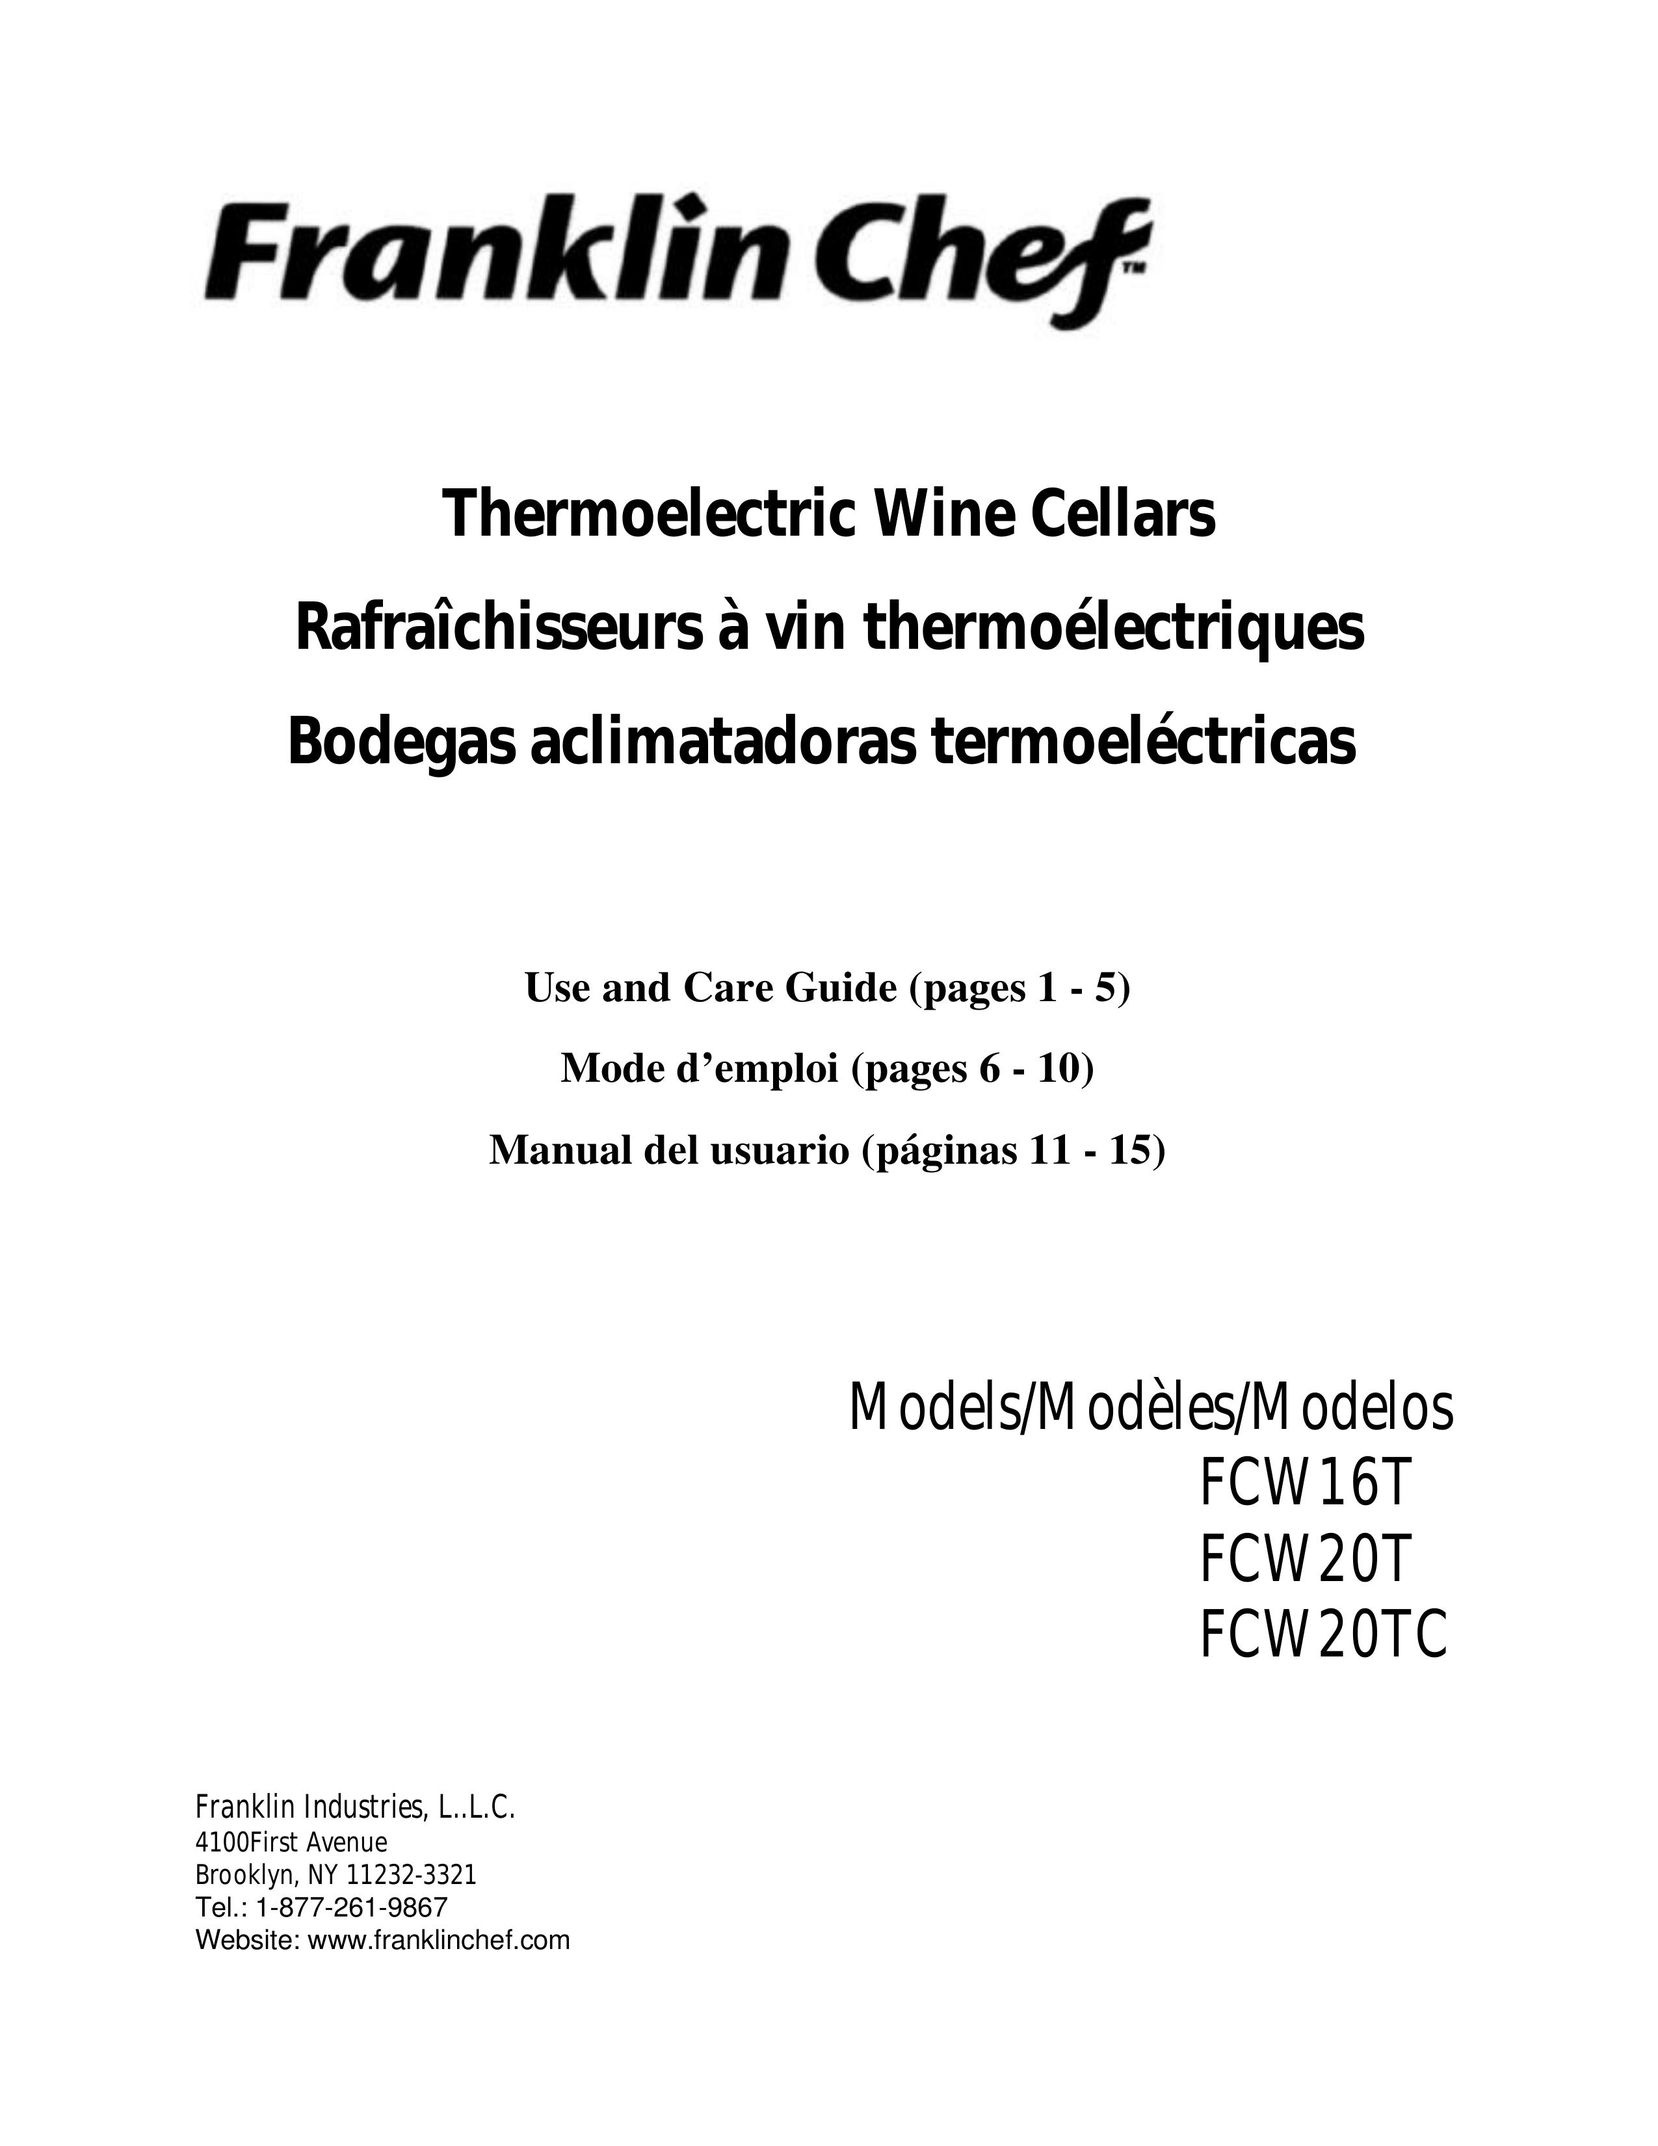 Franklin Industries, L.L.C. FCW16T Beverage Dispenser User Manual